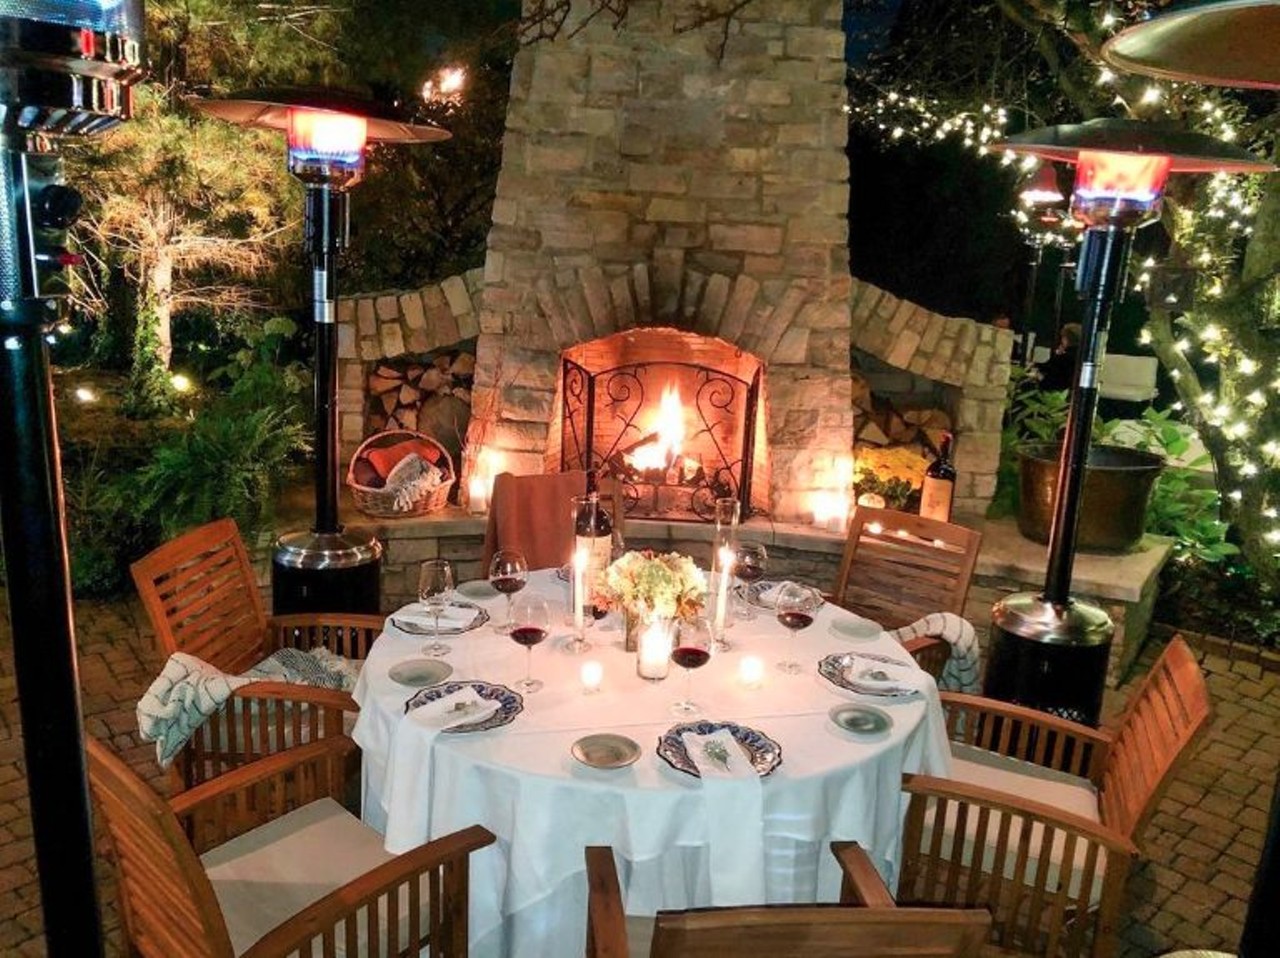 Best Romantic Restaurant (Oakland)
Cafe Cortina
Photo via Cafe Cortina / Instagram